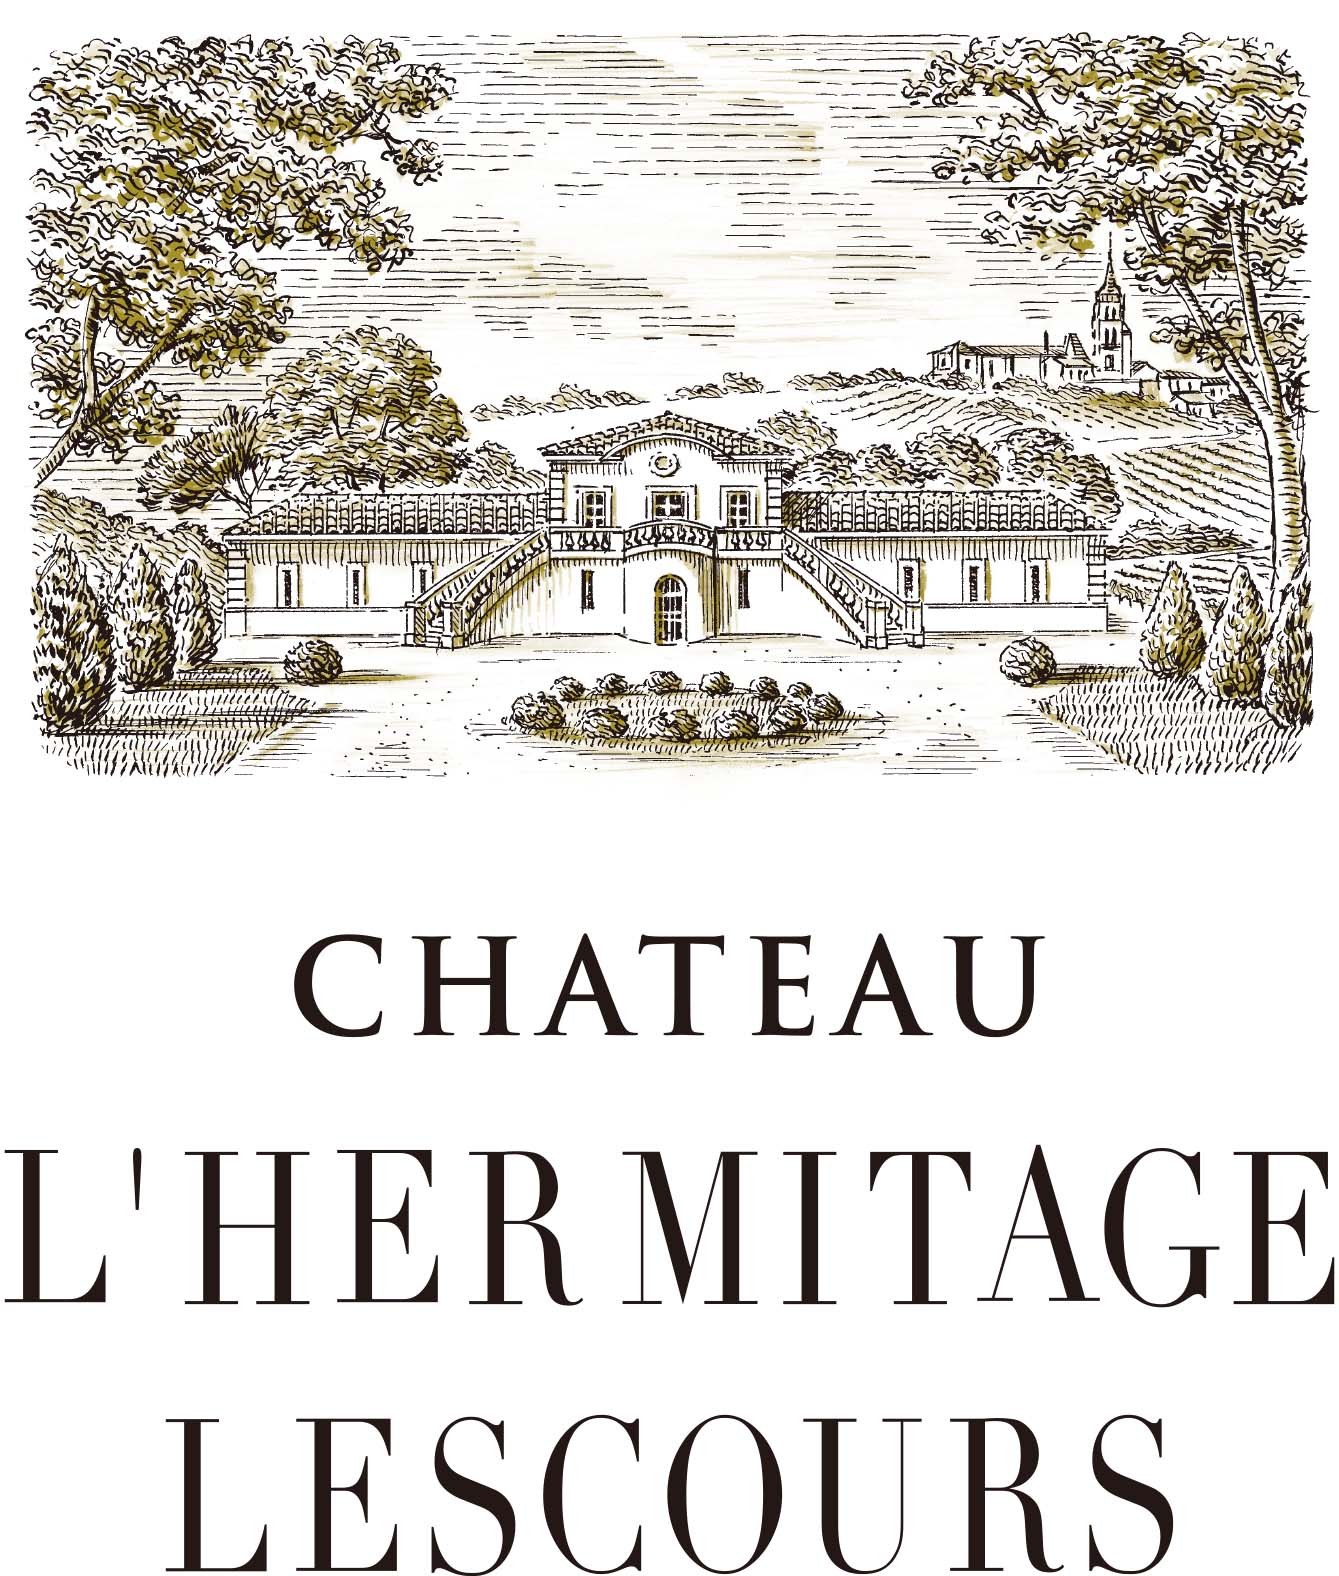 chateau-L-hermitage-lescours--gold-sponsor.jpg